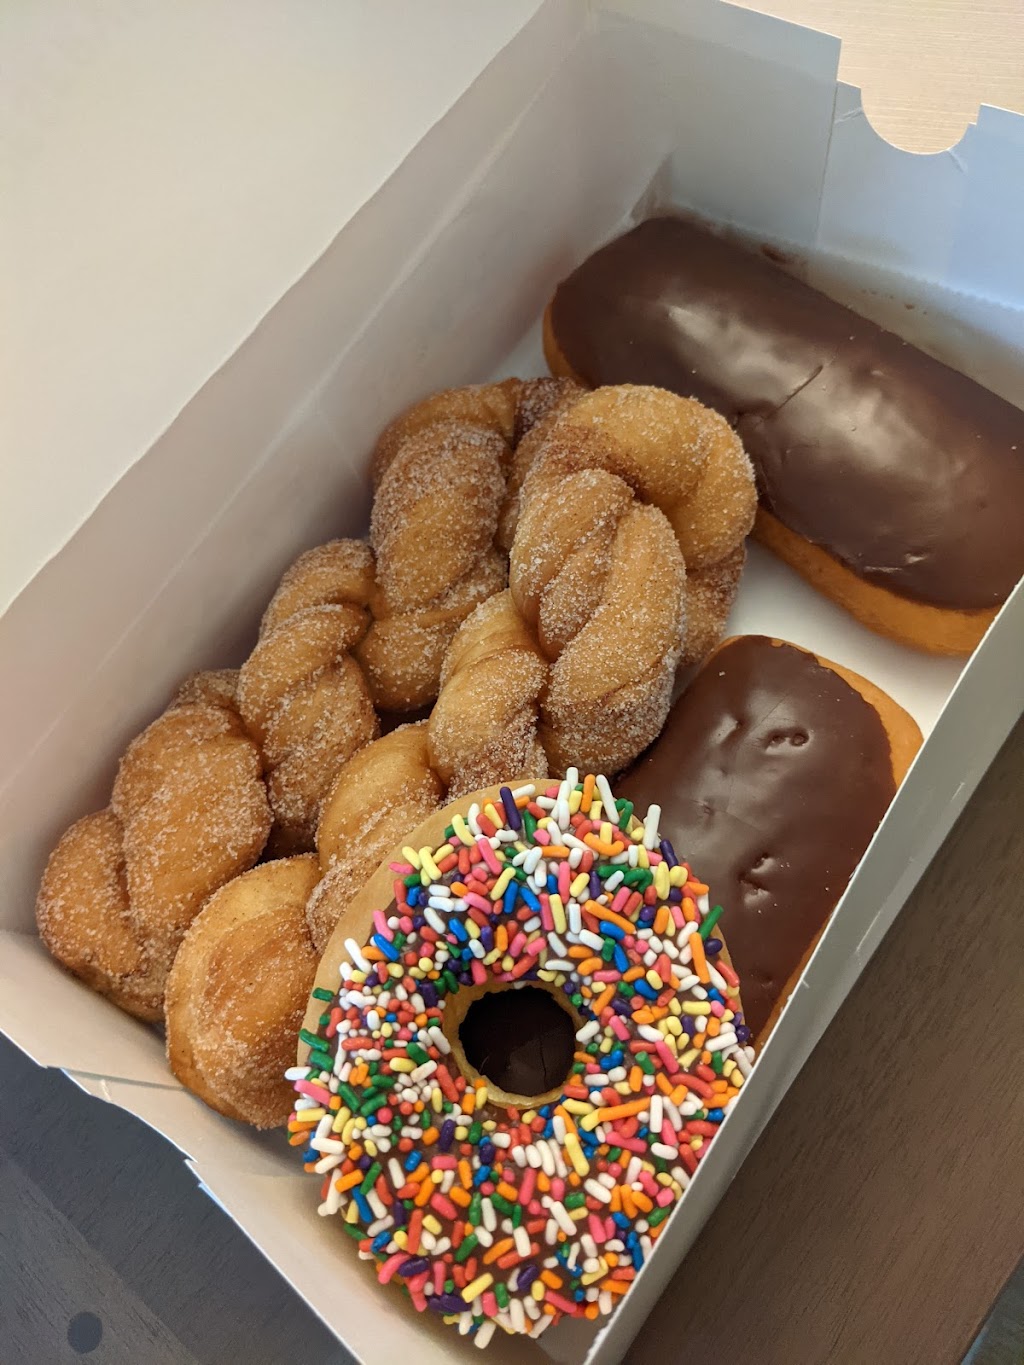 Donut King | 5 Broad St, Norwood, NJ 07648 | Phone: (201) 767-1723